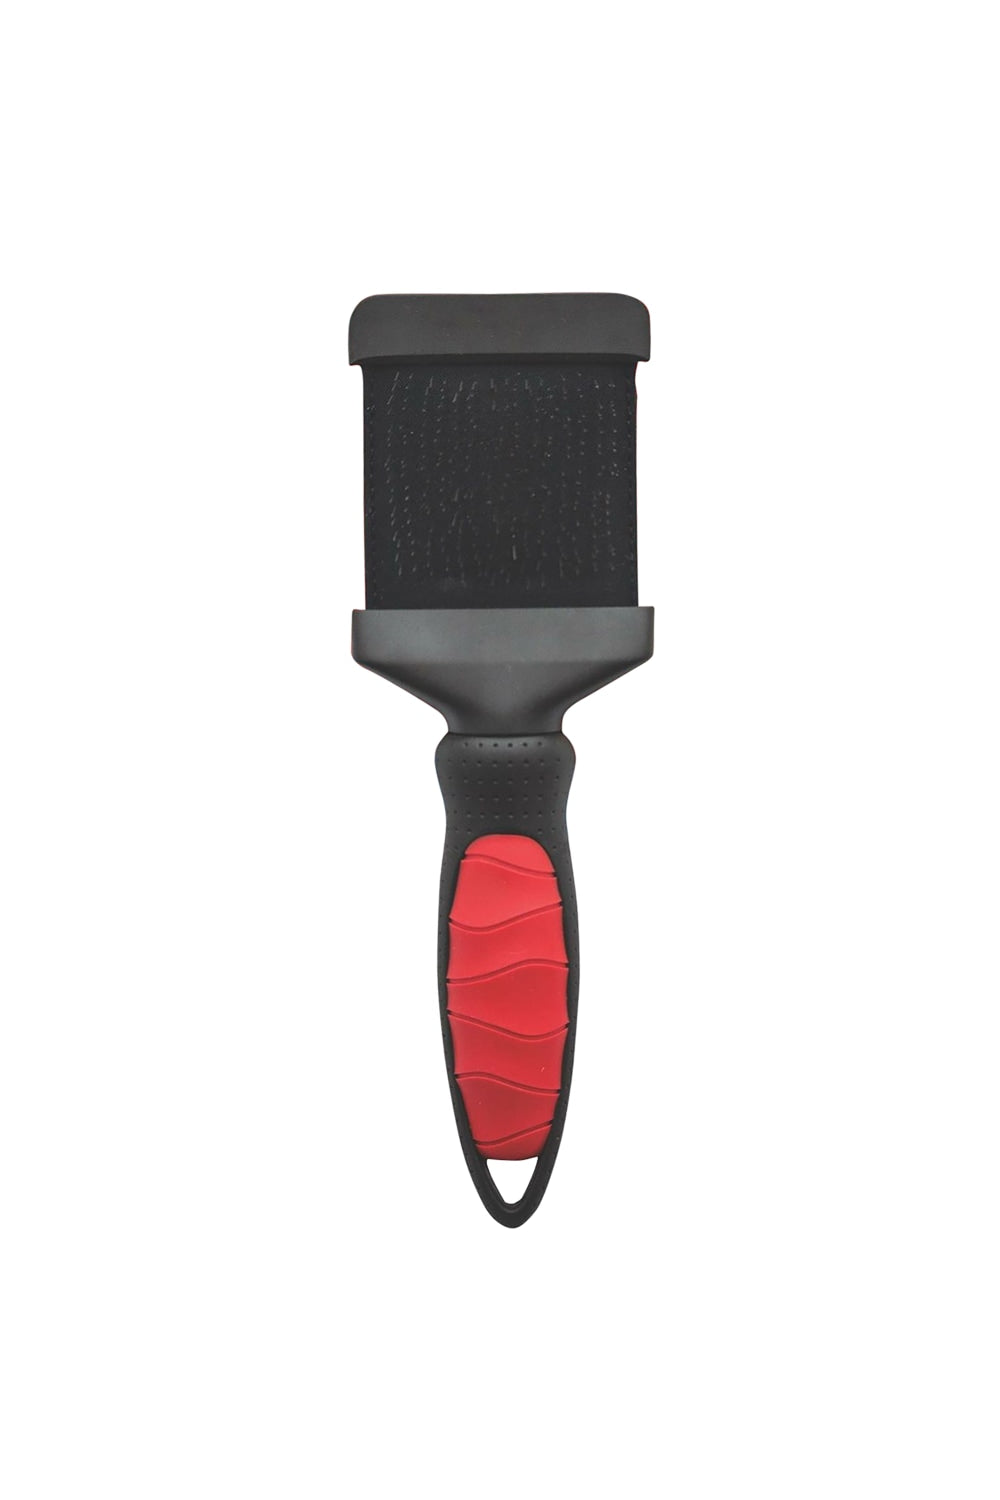 Mikki Pro Slicker Dog Grooming Brush (Black) (One Size)